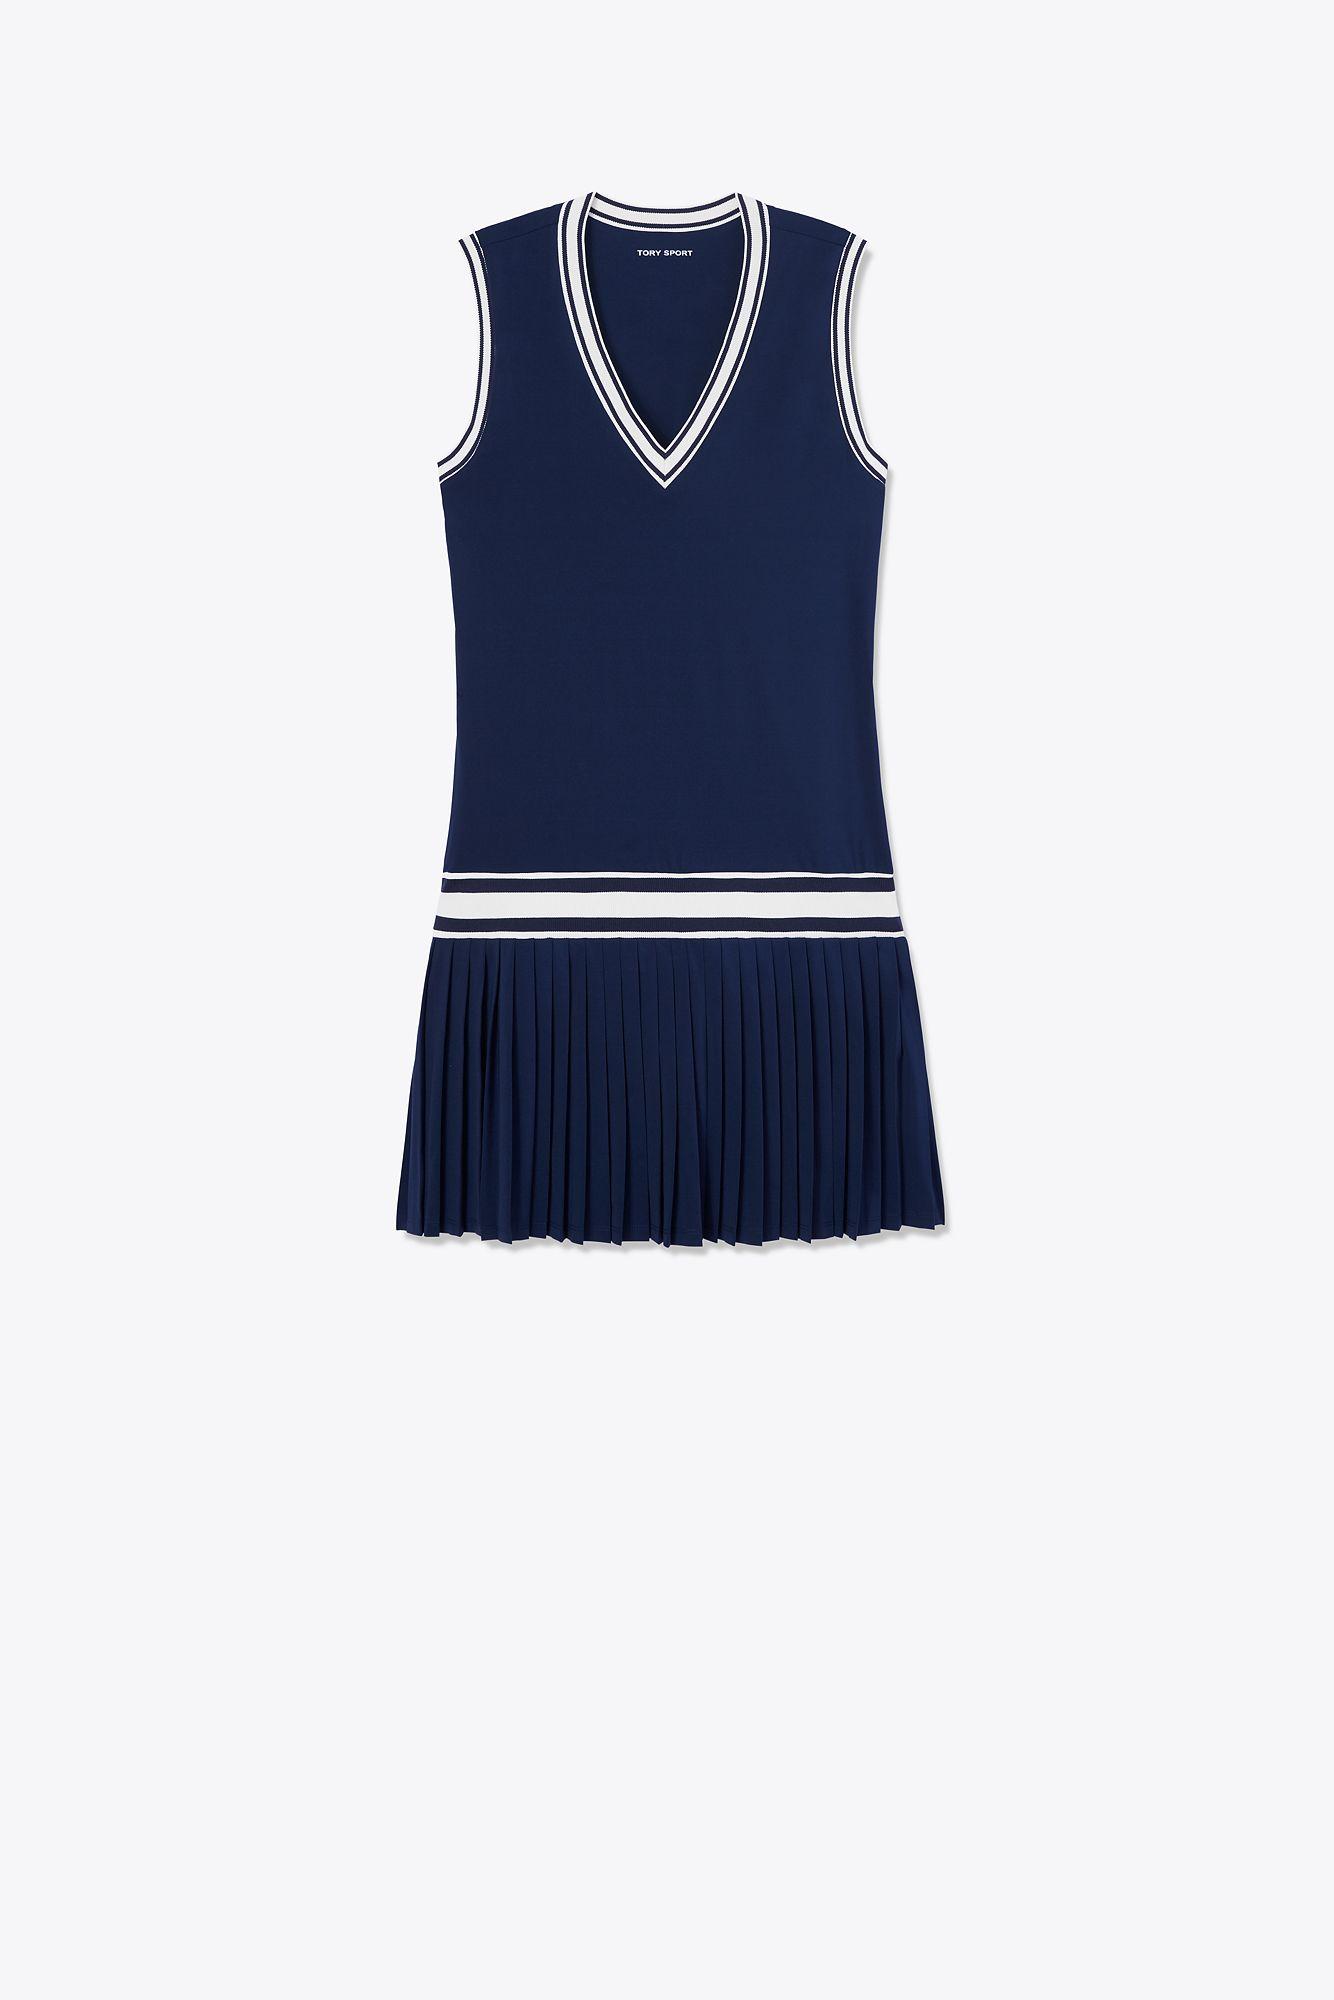 Tory Sport Tory Burch V-neck Tennis Dress in Blue | Lyst